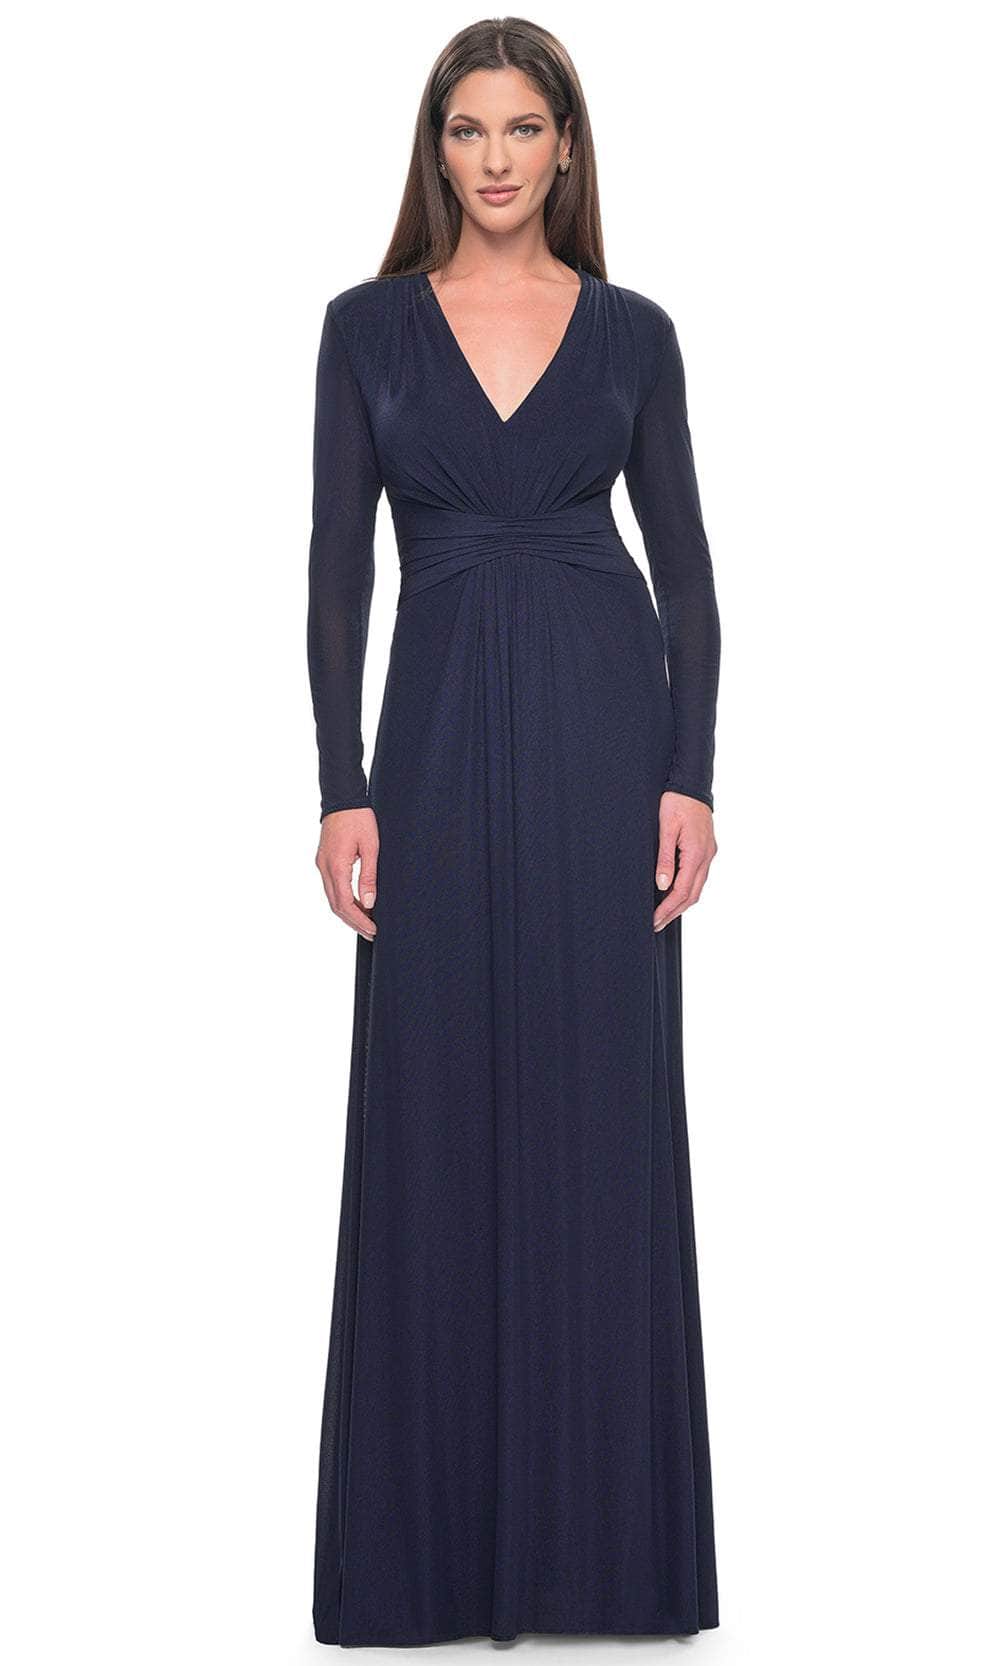 La Femme 30048 - Long Sleeve Jersey Evening Dress Mother of the Bride Dresses